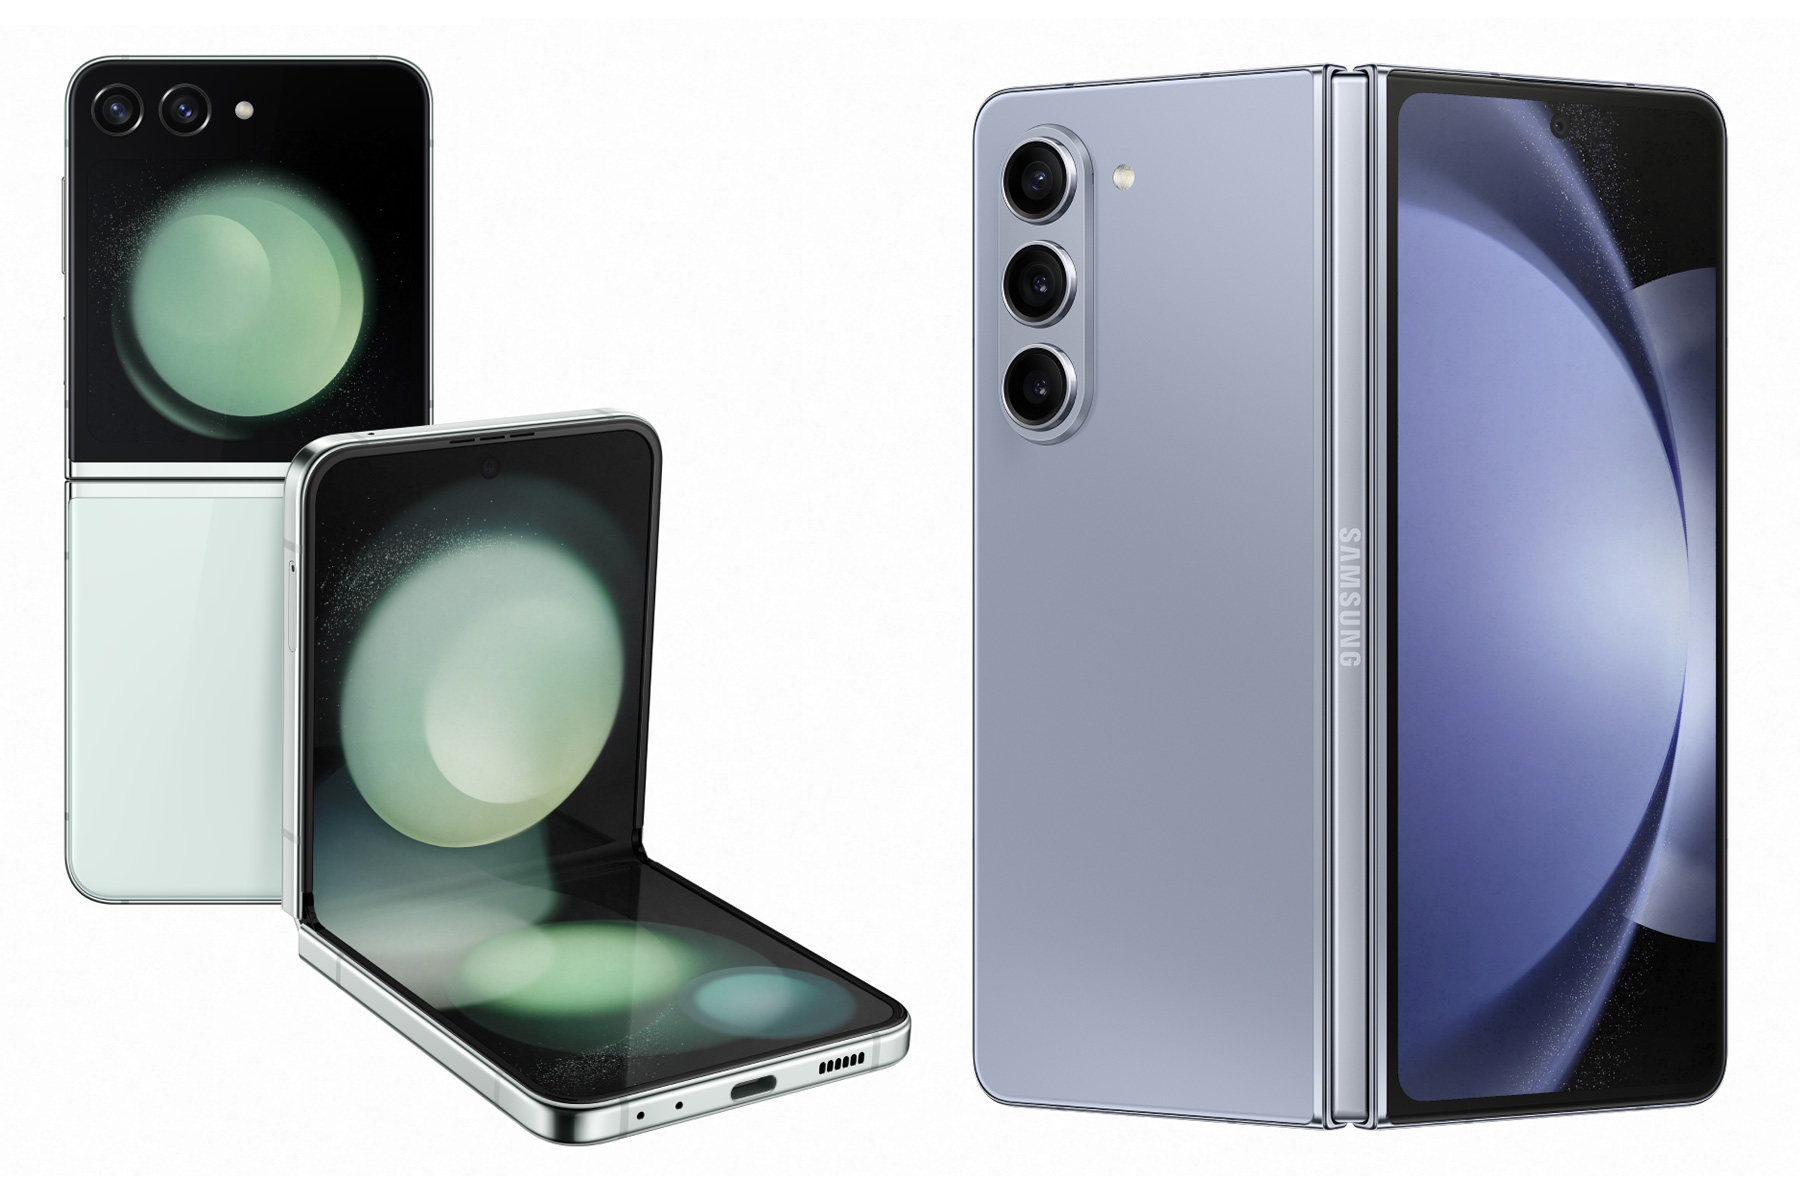 Samsung Galaxy Z Flip5 [left] and Samsung Galaxy Z Fold5 [right]